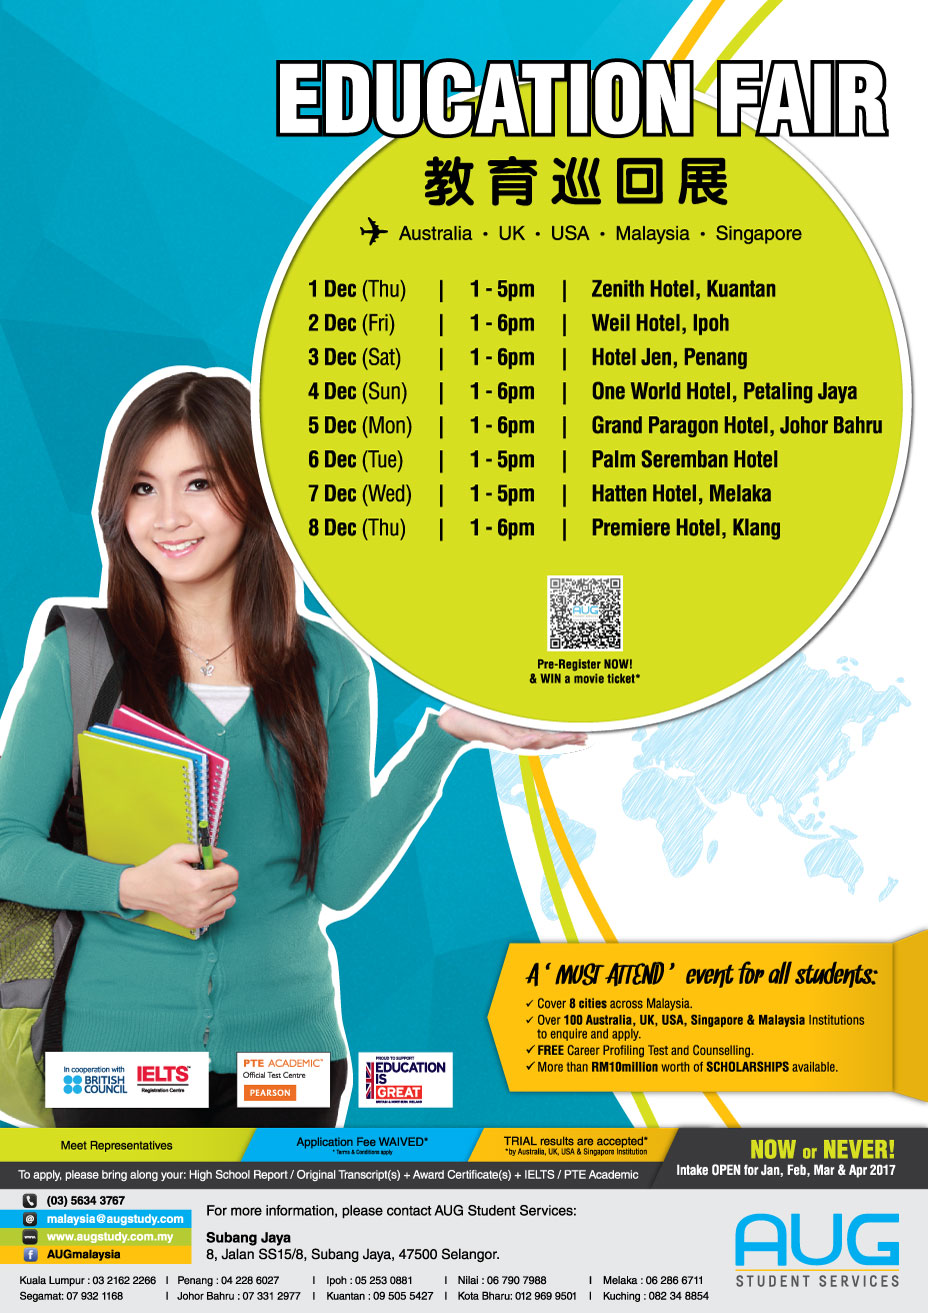 Aug S Largest Overseas Education Fair Is Coming Soon In Johor Bahru Johor Now